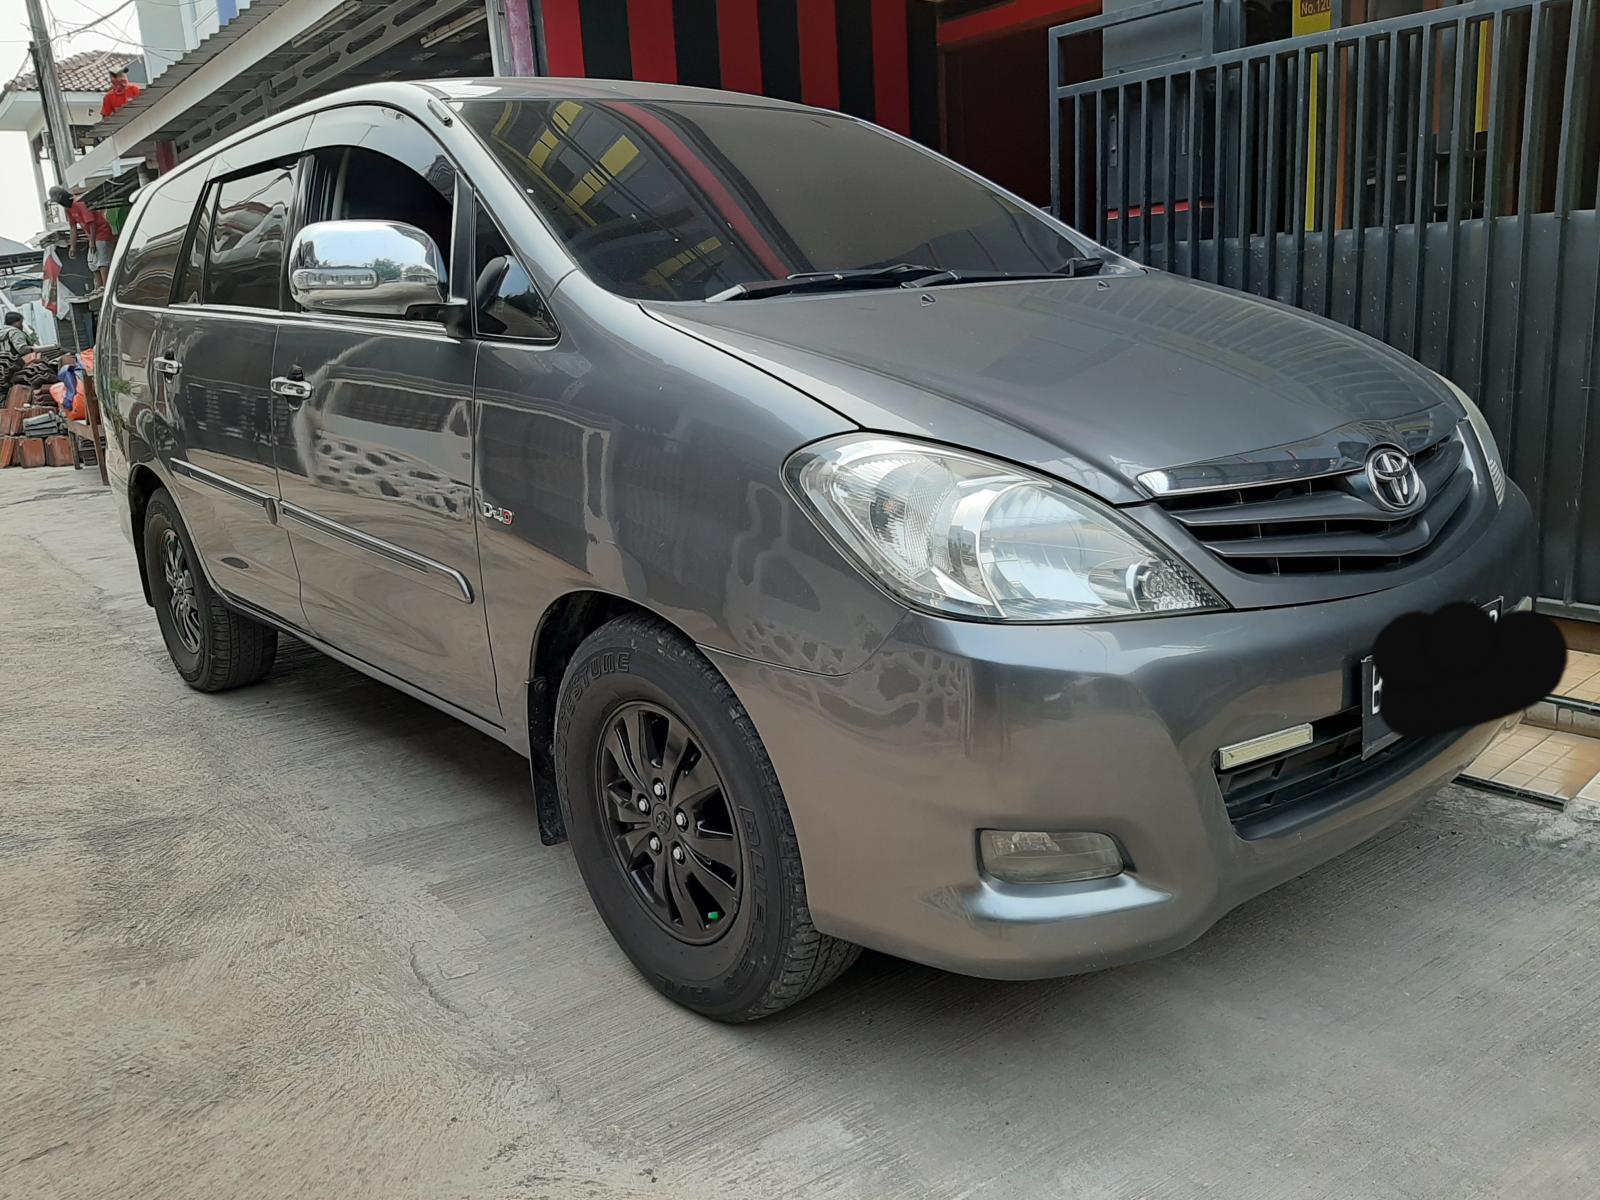 Dijual Mobil Toyota Kijang KIiang Innova 25 G 2010 Di Depok 4452291